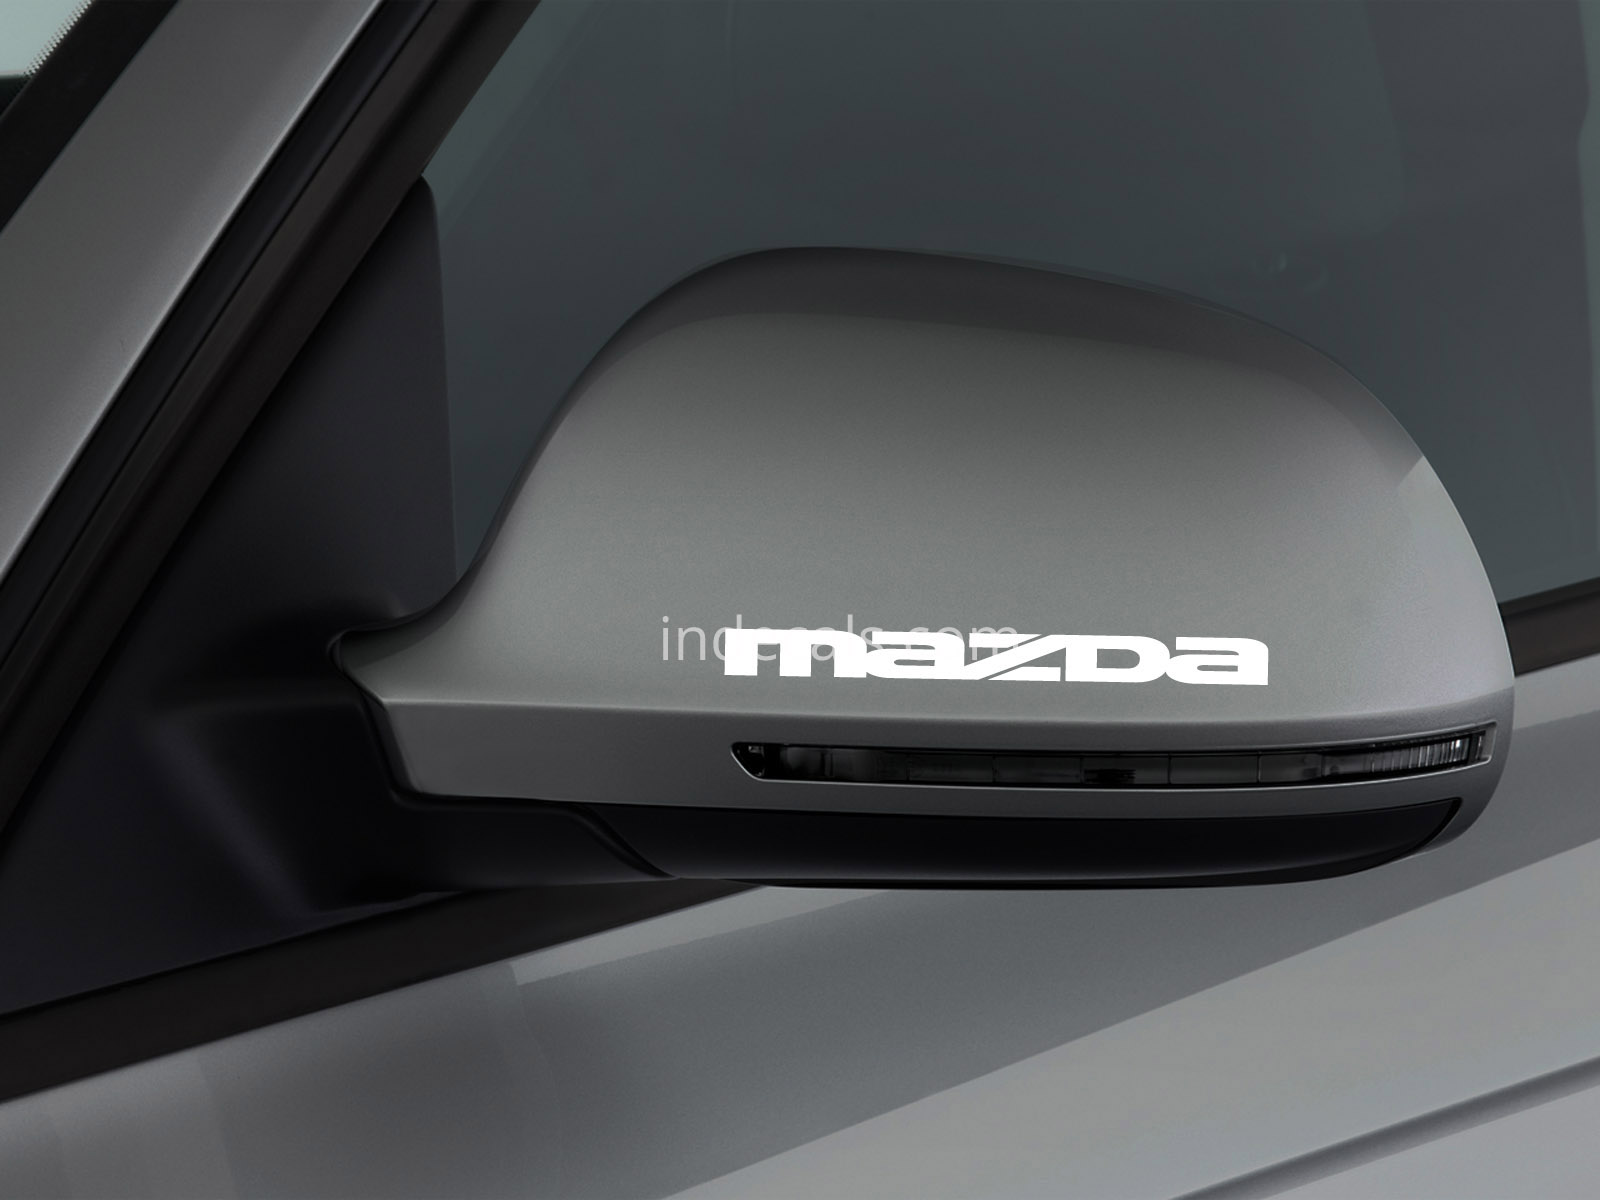 3 x Mazda Stickers for Mirror - White